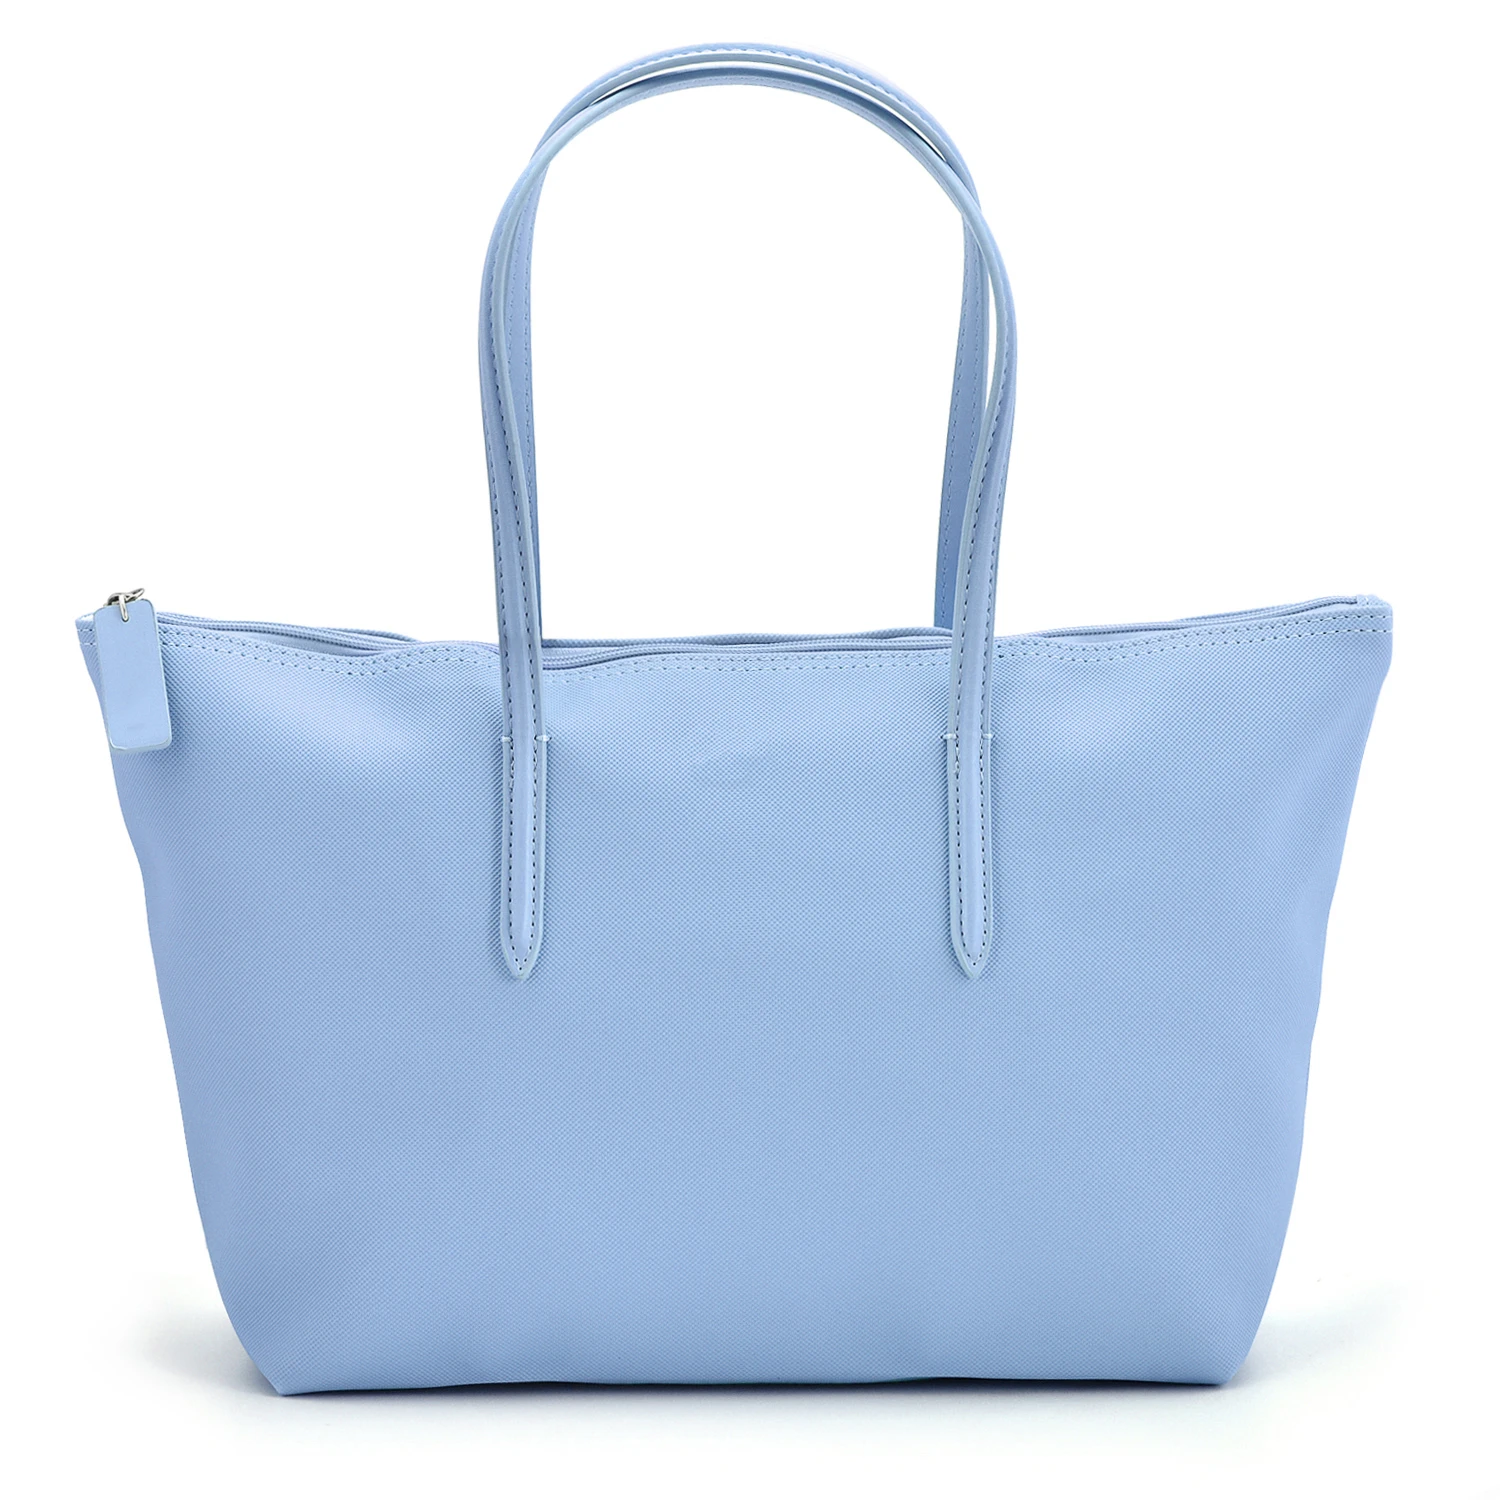 

Women Fashion TOTE Bags Classic Shopper Multicolors Laydis Shopping School Office Travel Shoulder Zipper Big HandBag